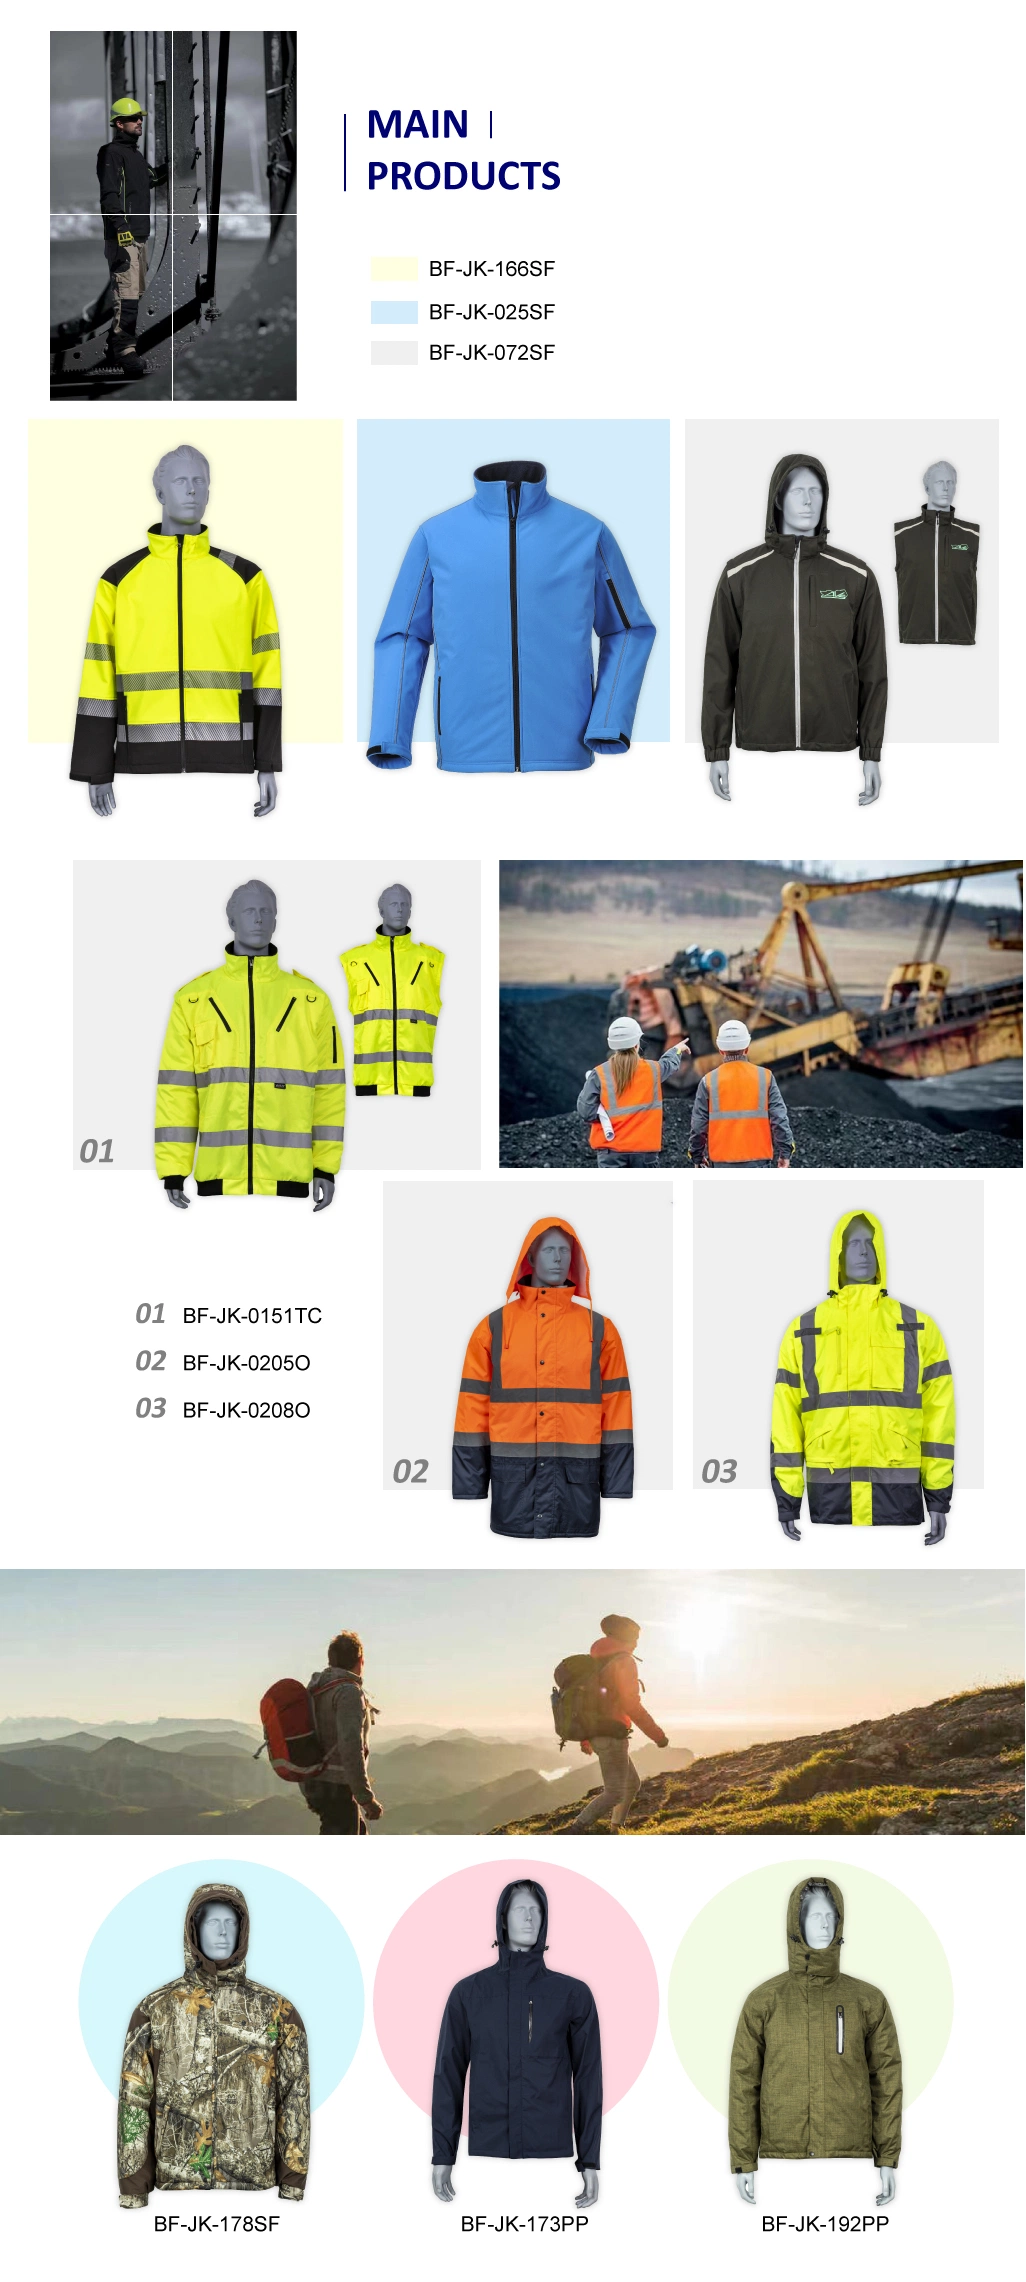 Custom PVC Coating Waterproof Rain Suit Coat Jacket Yellow Raincoats Rain Poncho for Men Women Adults